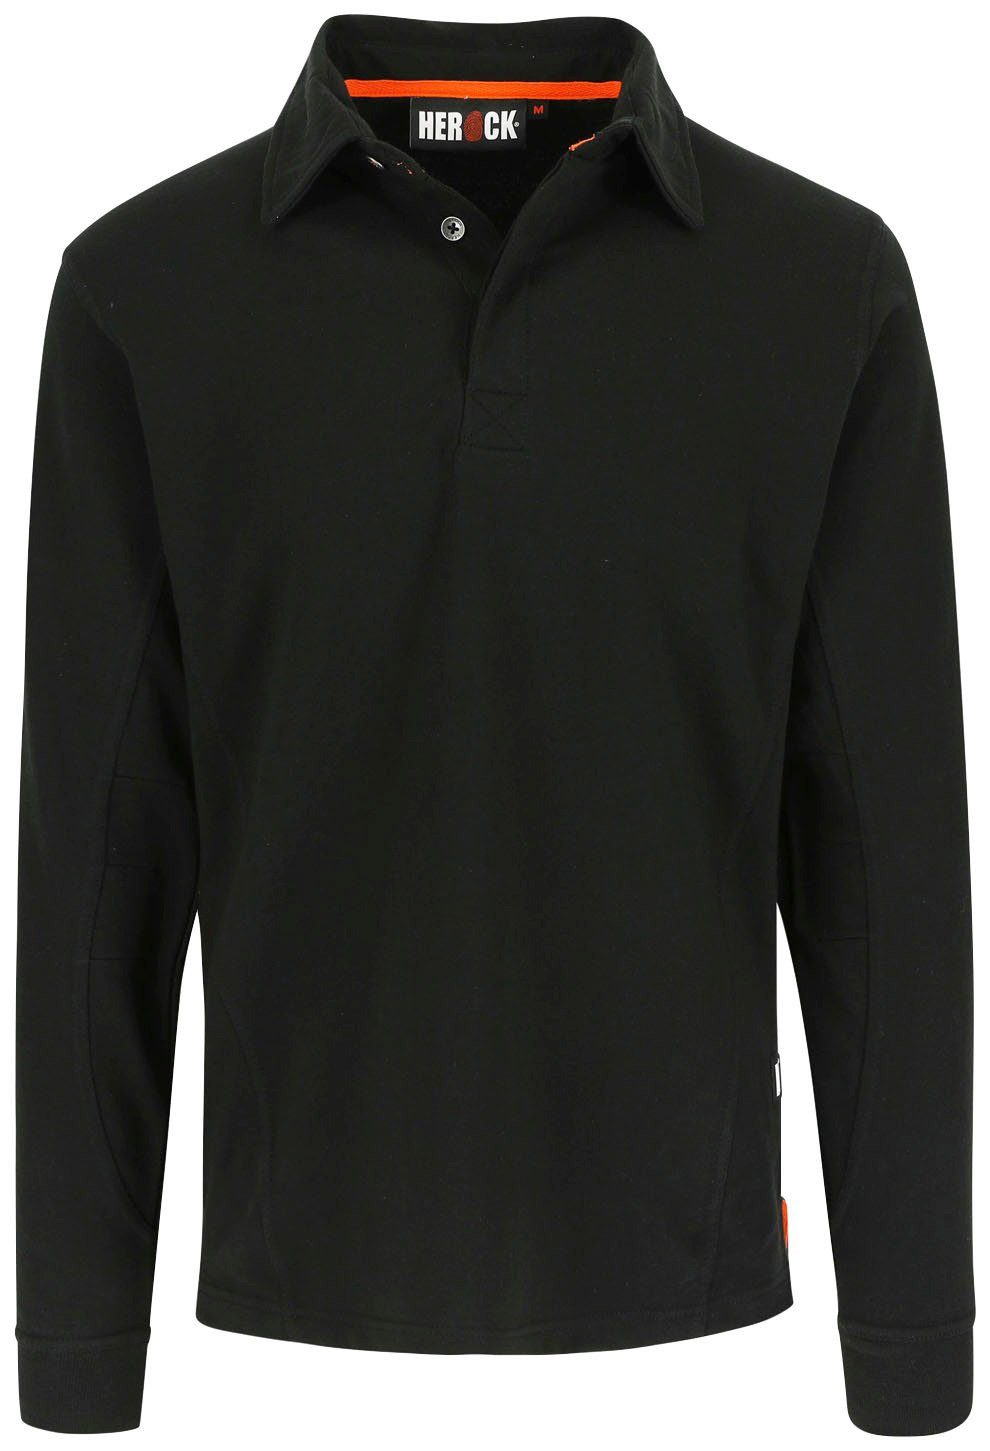 Polo verschiedene Herock Tragegefühl, schwarz Langärmlig Farben Langarm-Poloshirt Troja figurformend, leicht Angenehmes